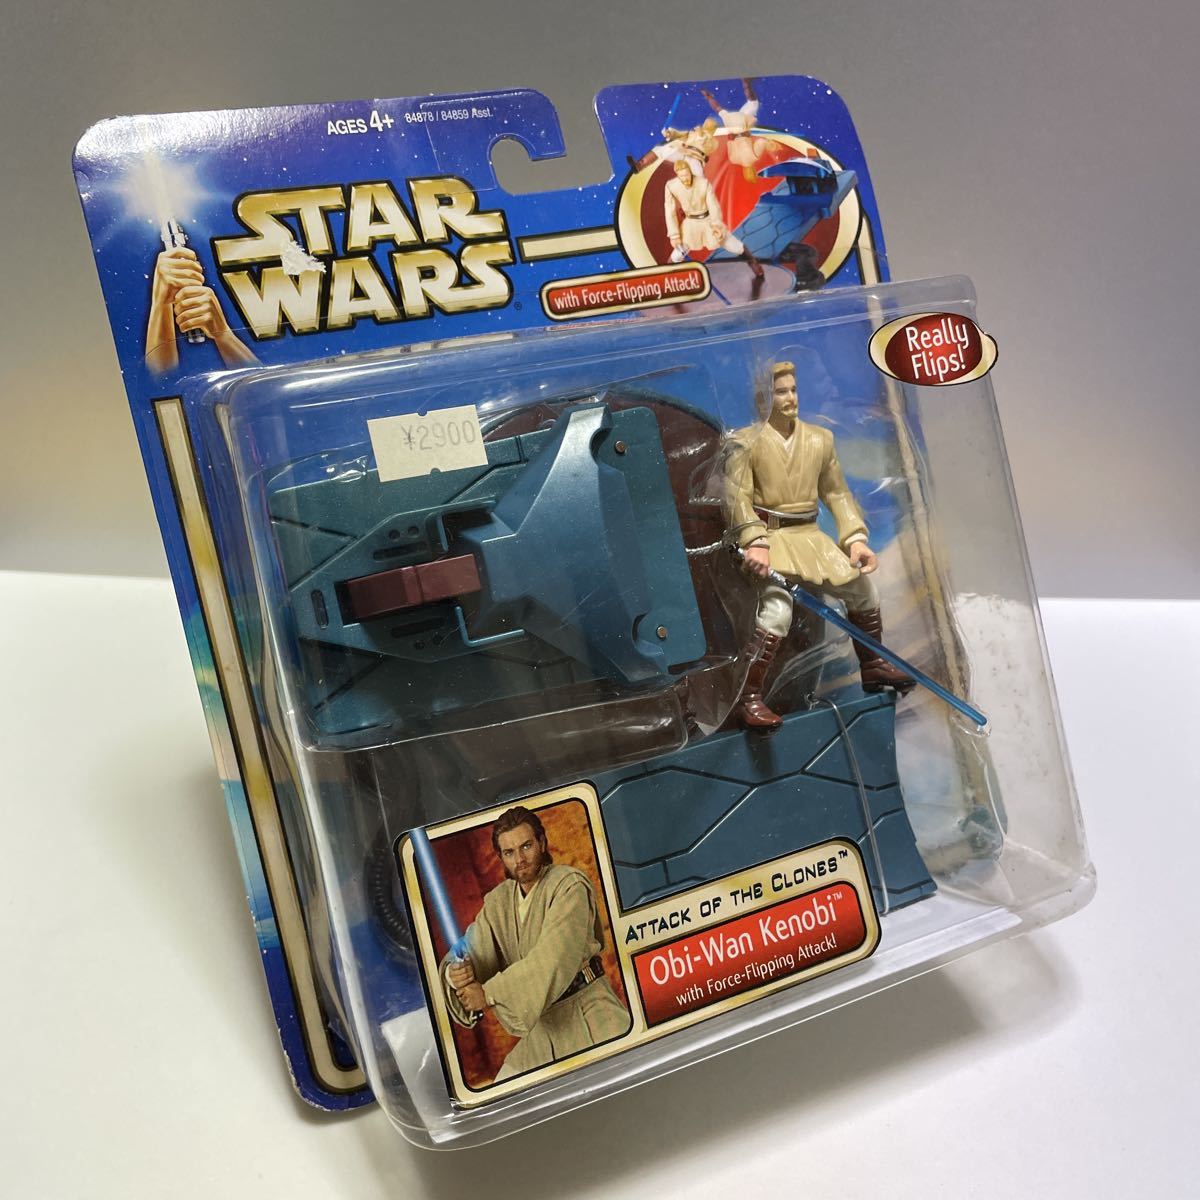  Star Wars episode 2 Obi Wan Kenobi is zbroSTAR WARS Basic figure 3.75